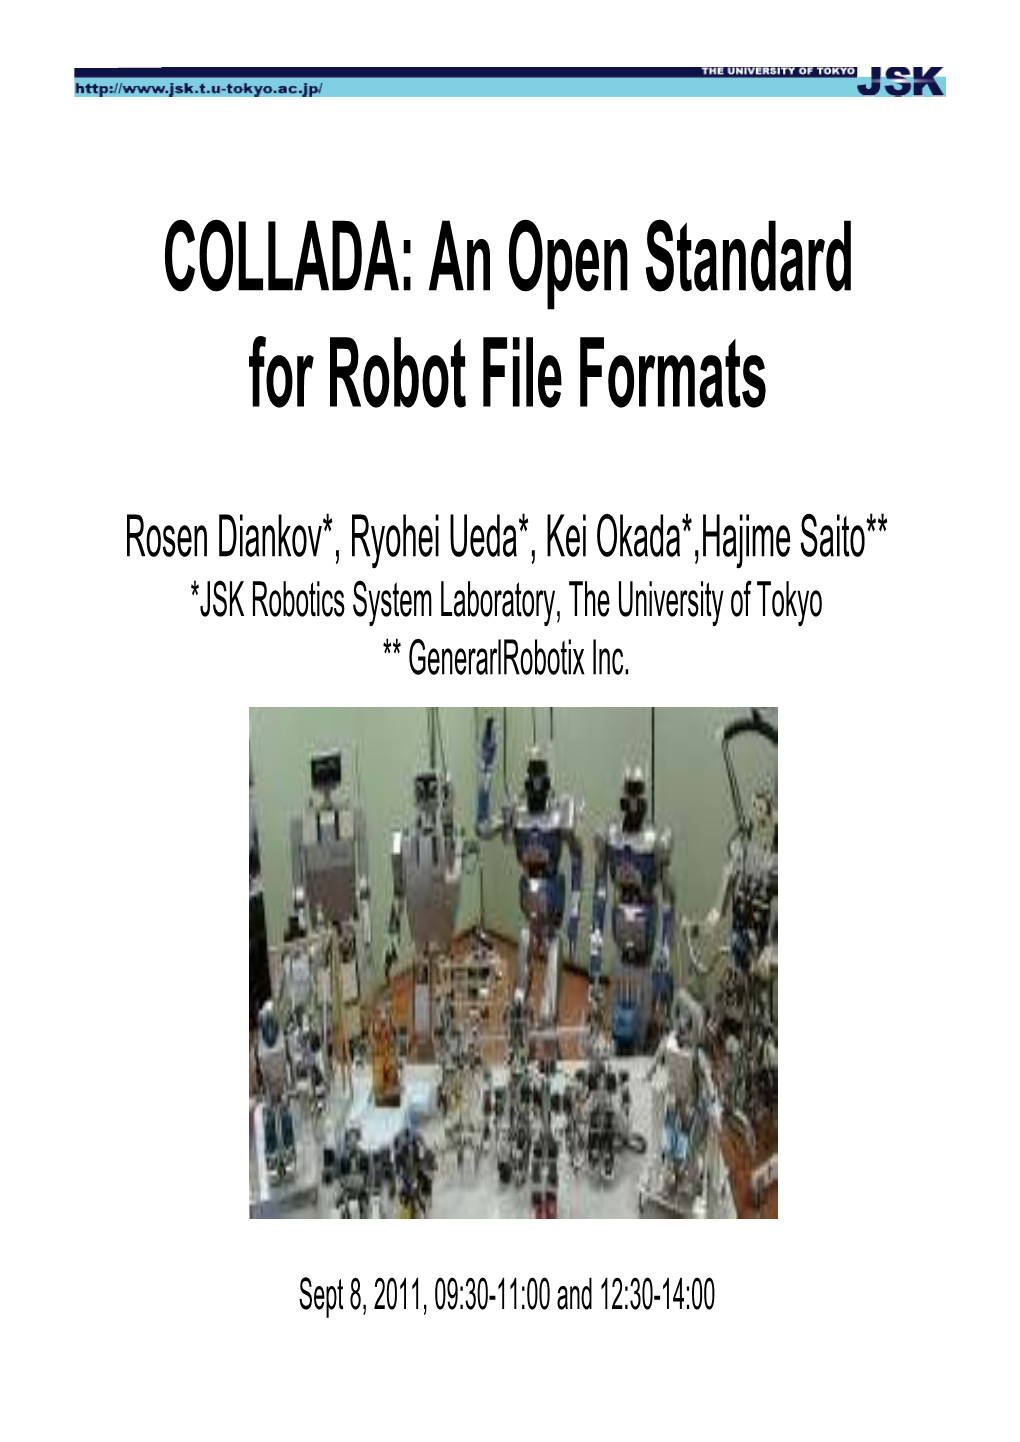 COLLADA: an Open Standard for Robot File Formats